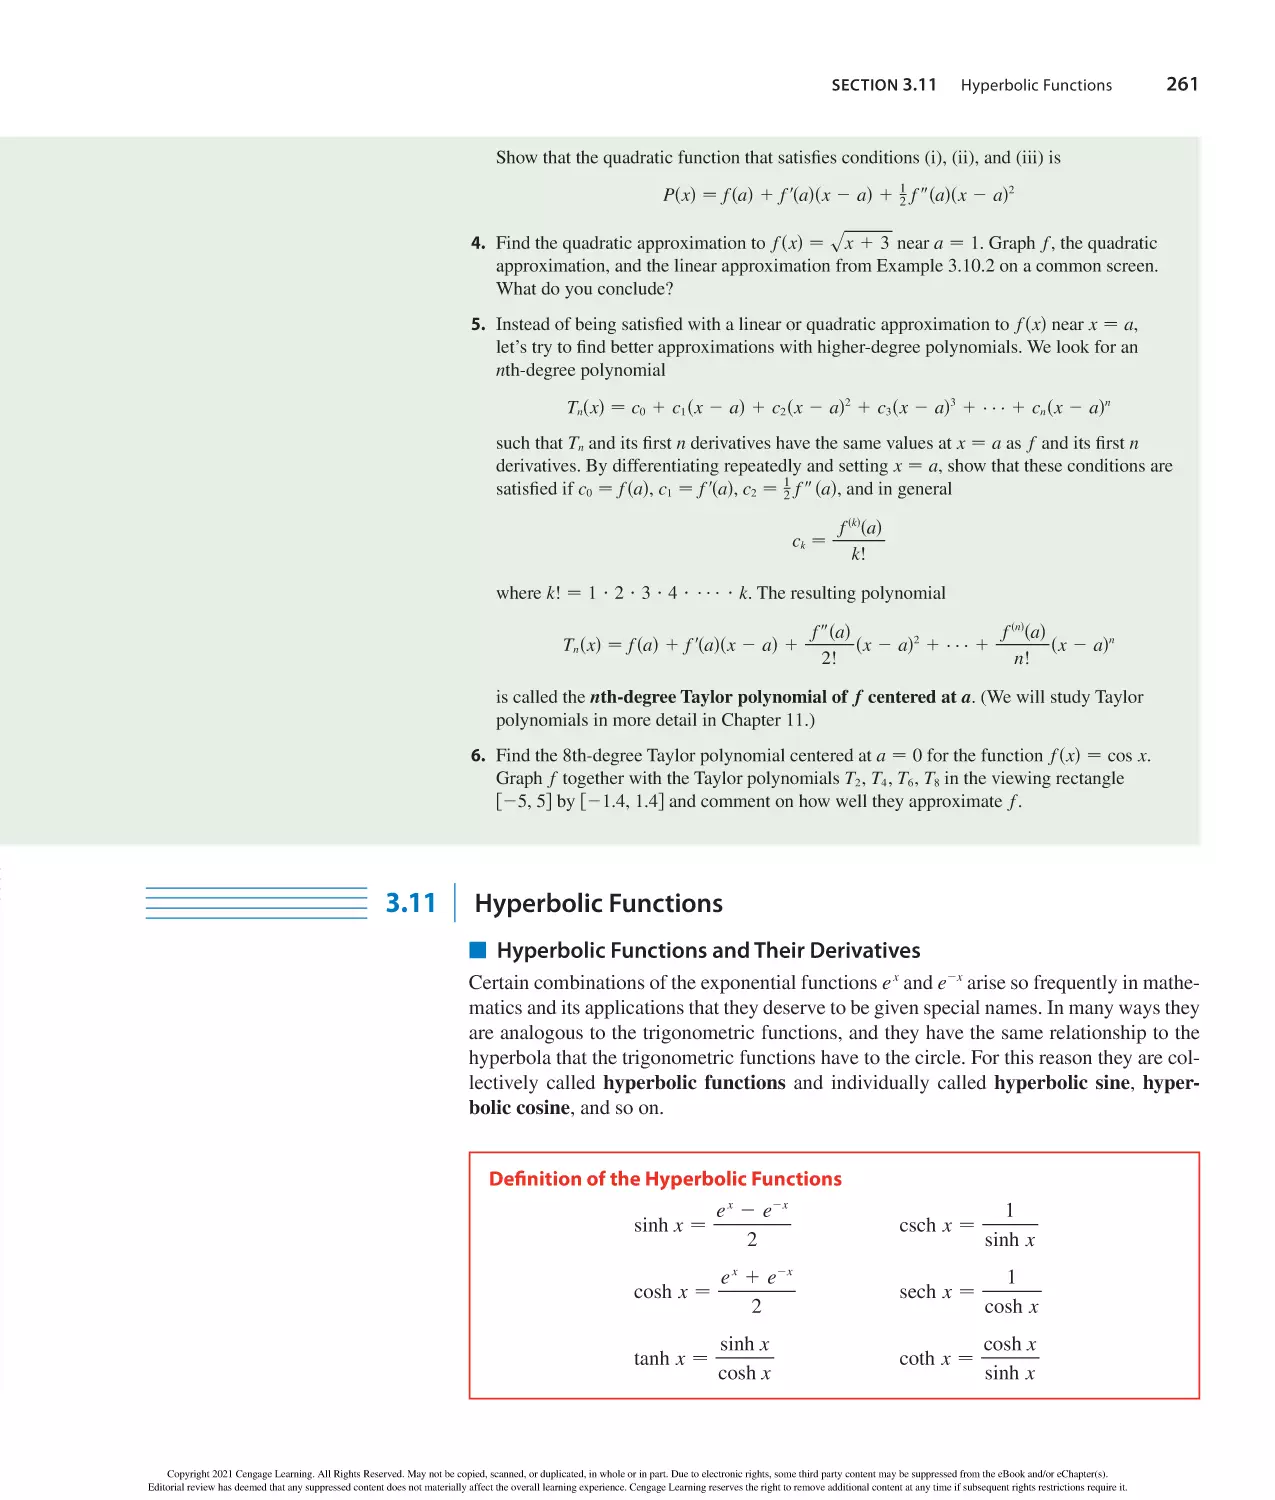 3.11 Hyperbolic Functions